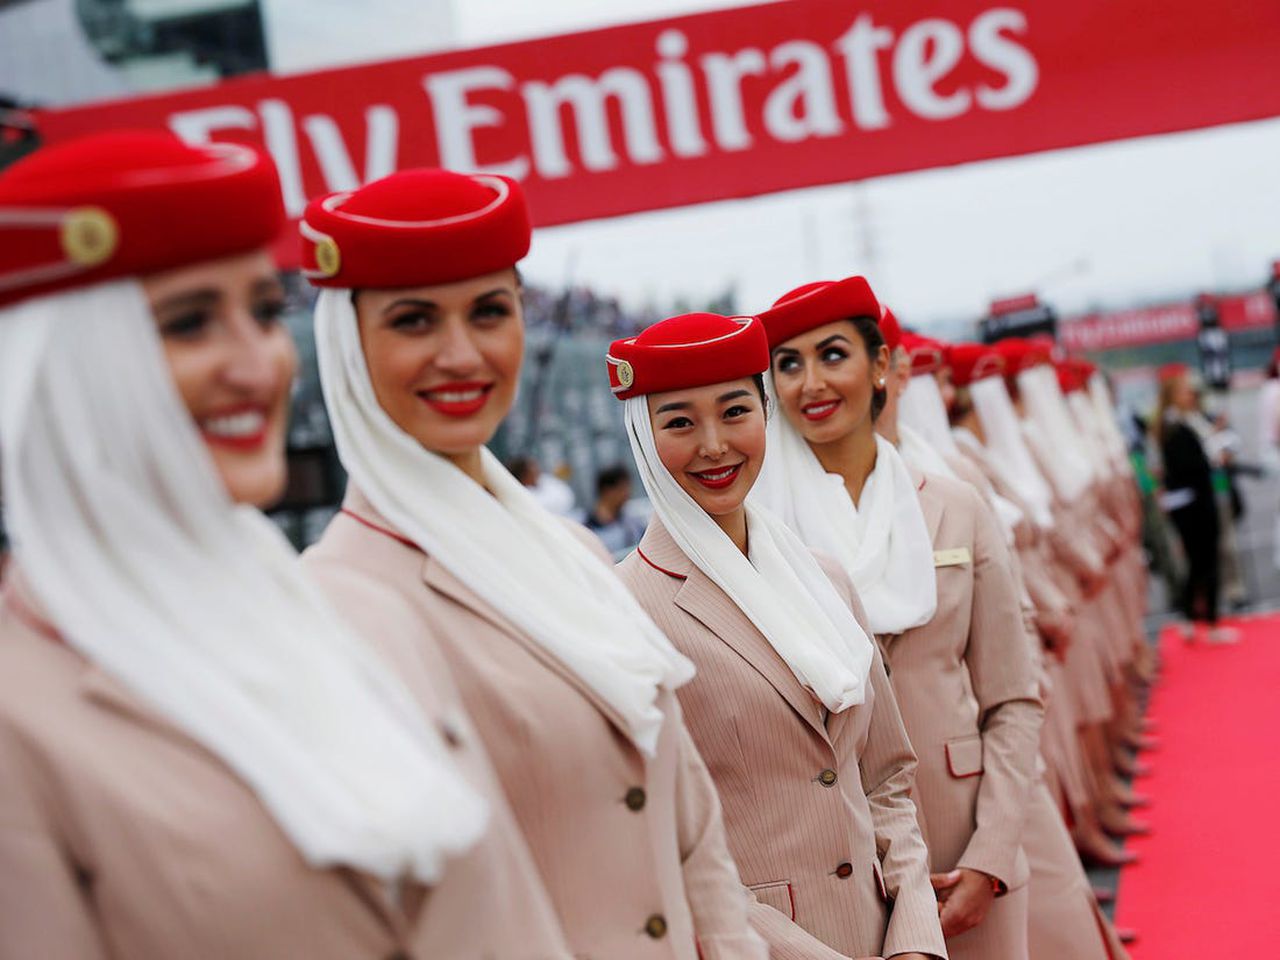 Emirates invited a viral video kid to visit its training centre in Dubai, Image via Toru Hanai/Reuters